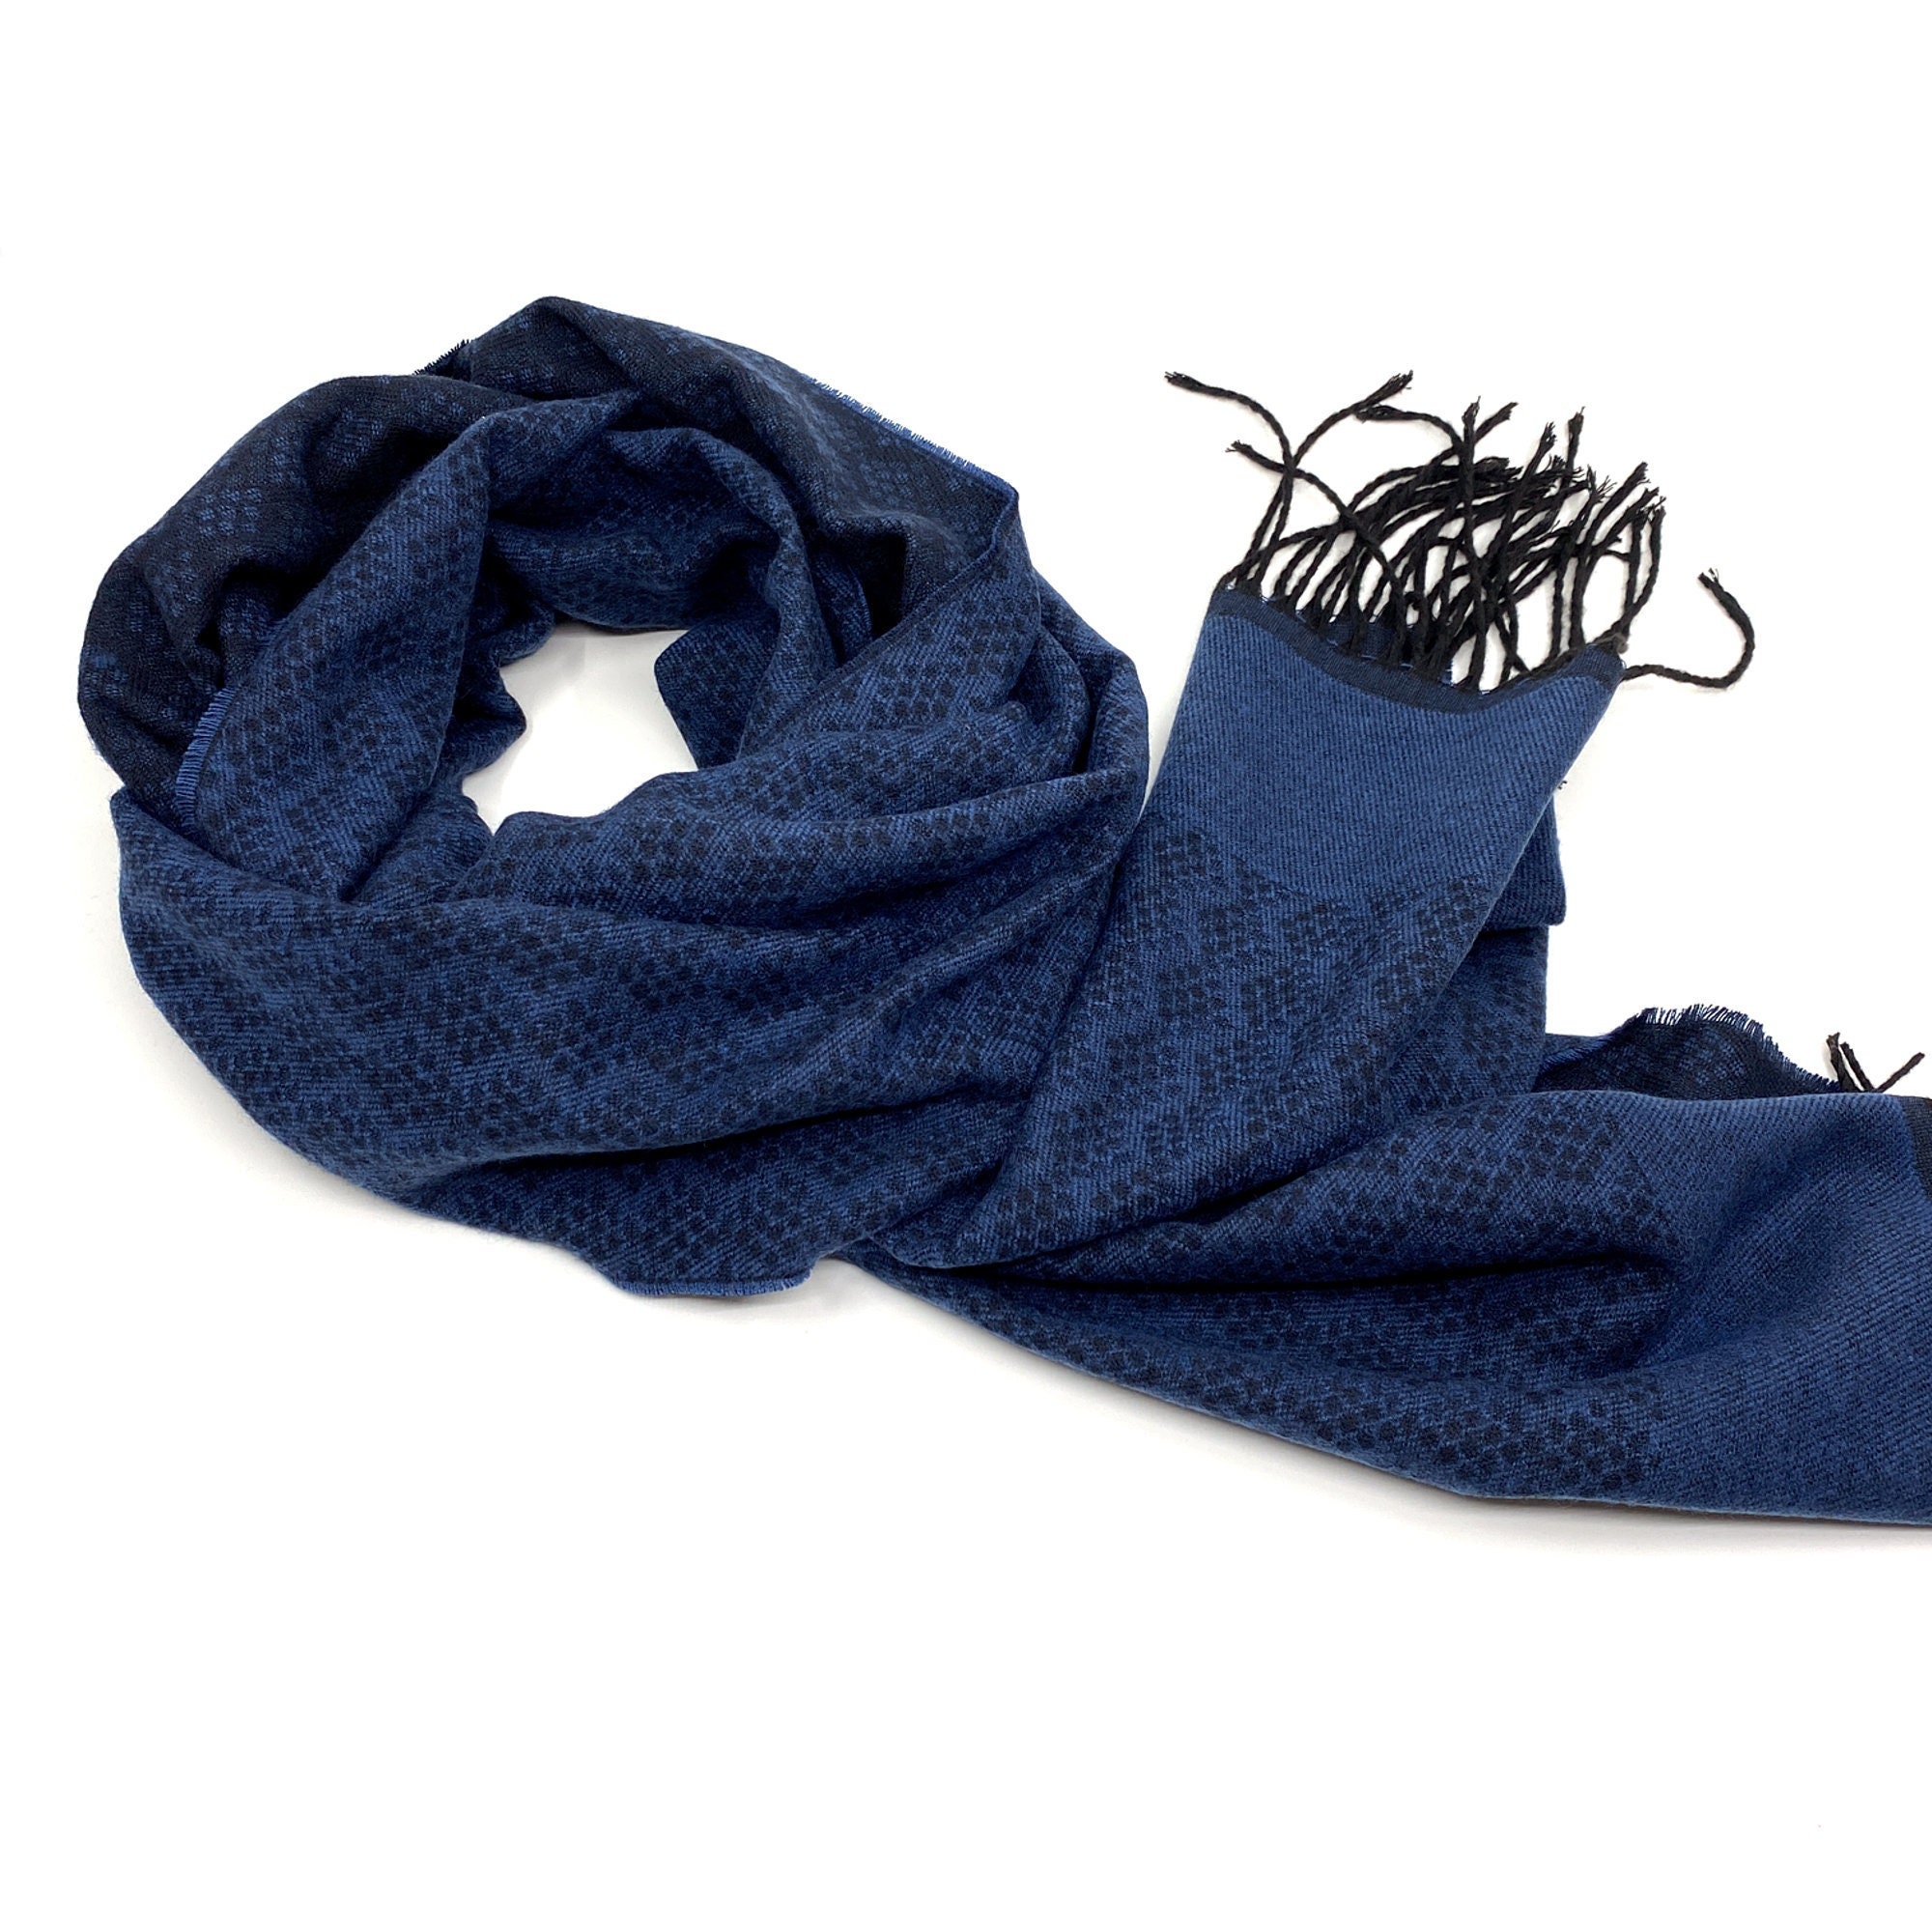 HamzahSilkScarves Mens Silk Scarf, Wrap Scarf for Him, Elegant Foulard with Floral Pattern, Navy Blue Scarf Men, 71x26 inch Large Scarves, Unique Gift for Him